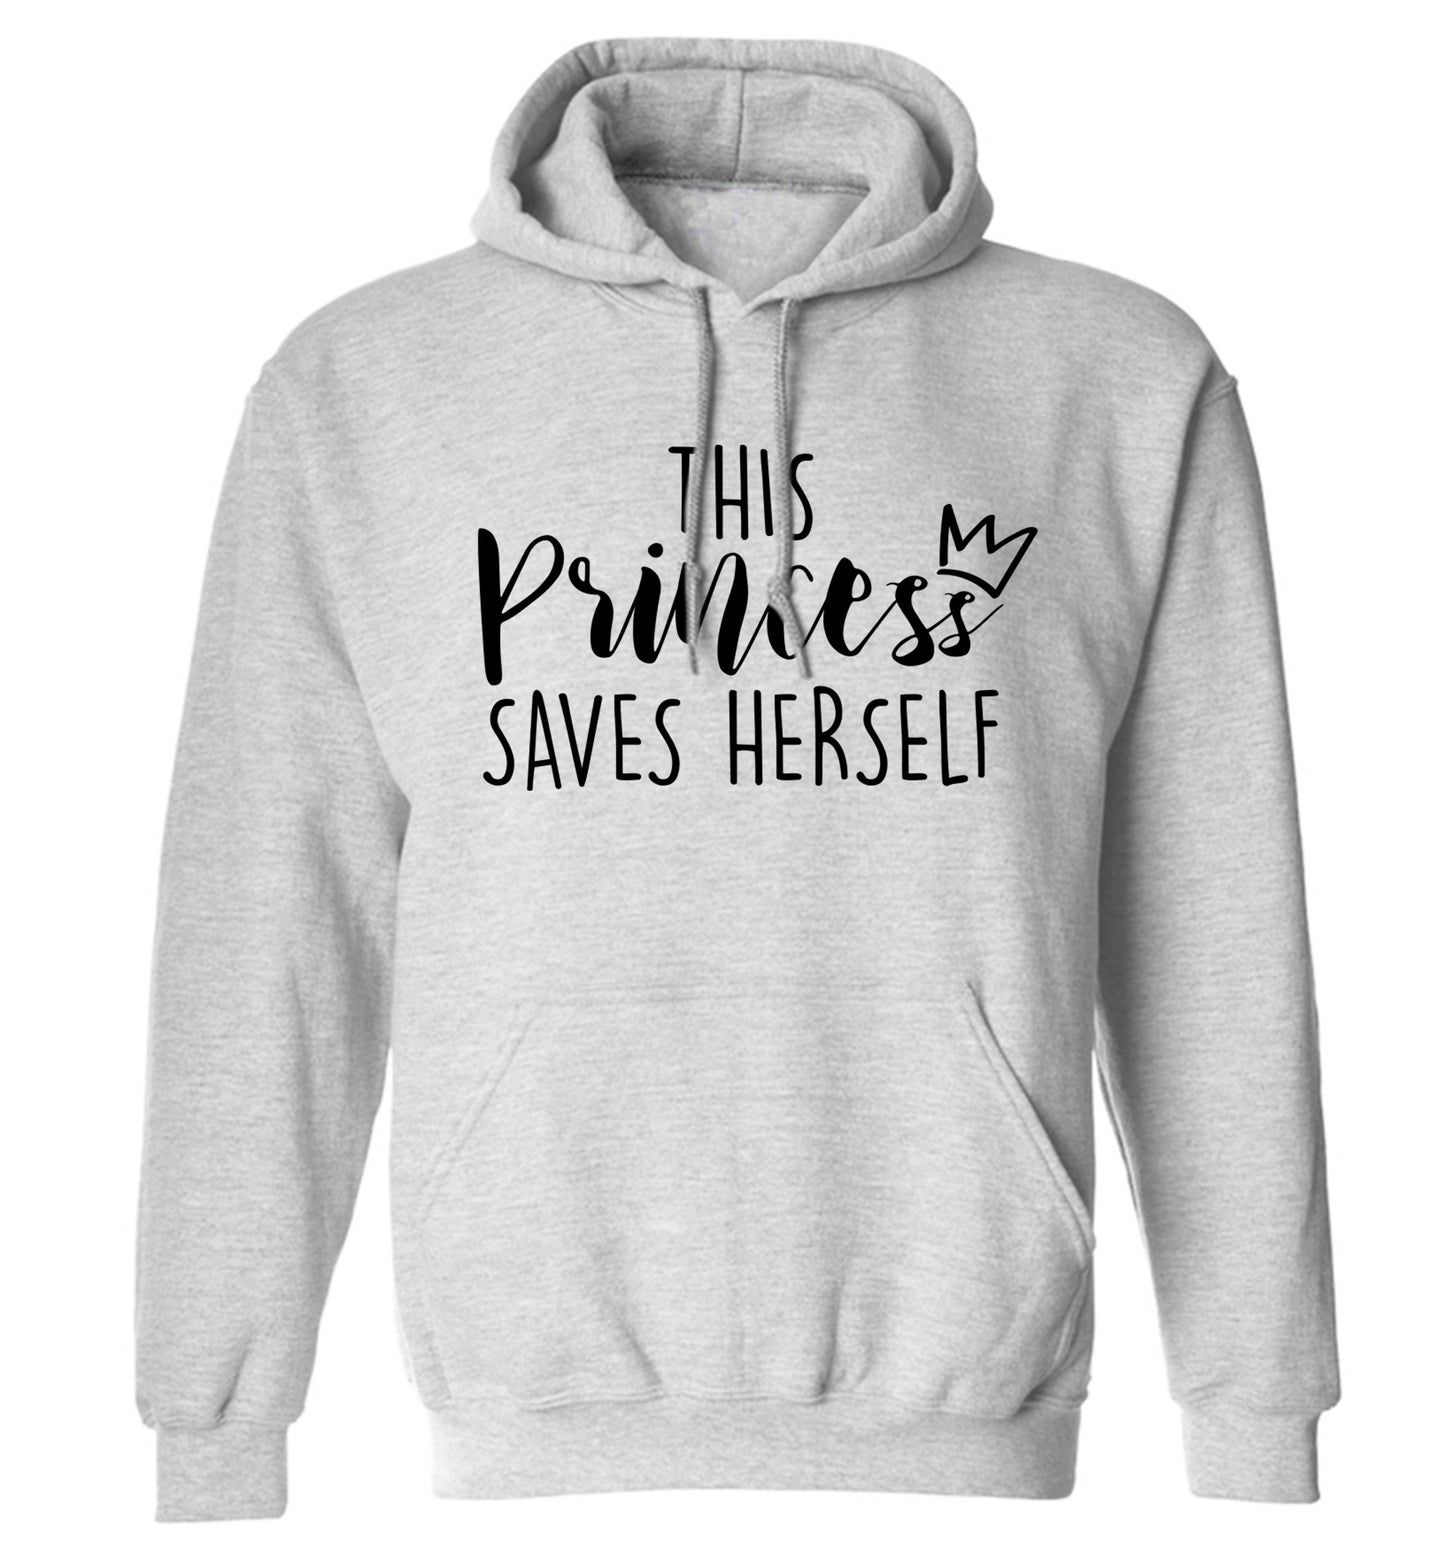 This princess saves herself adults unisex grey hoodie 2XL